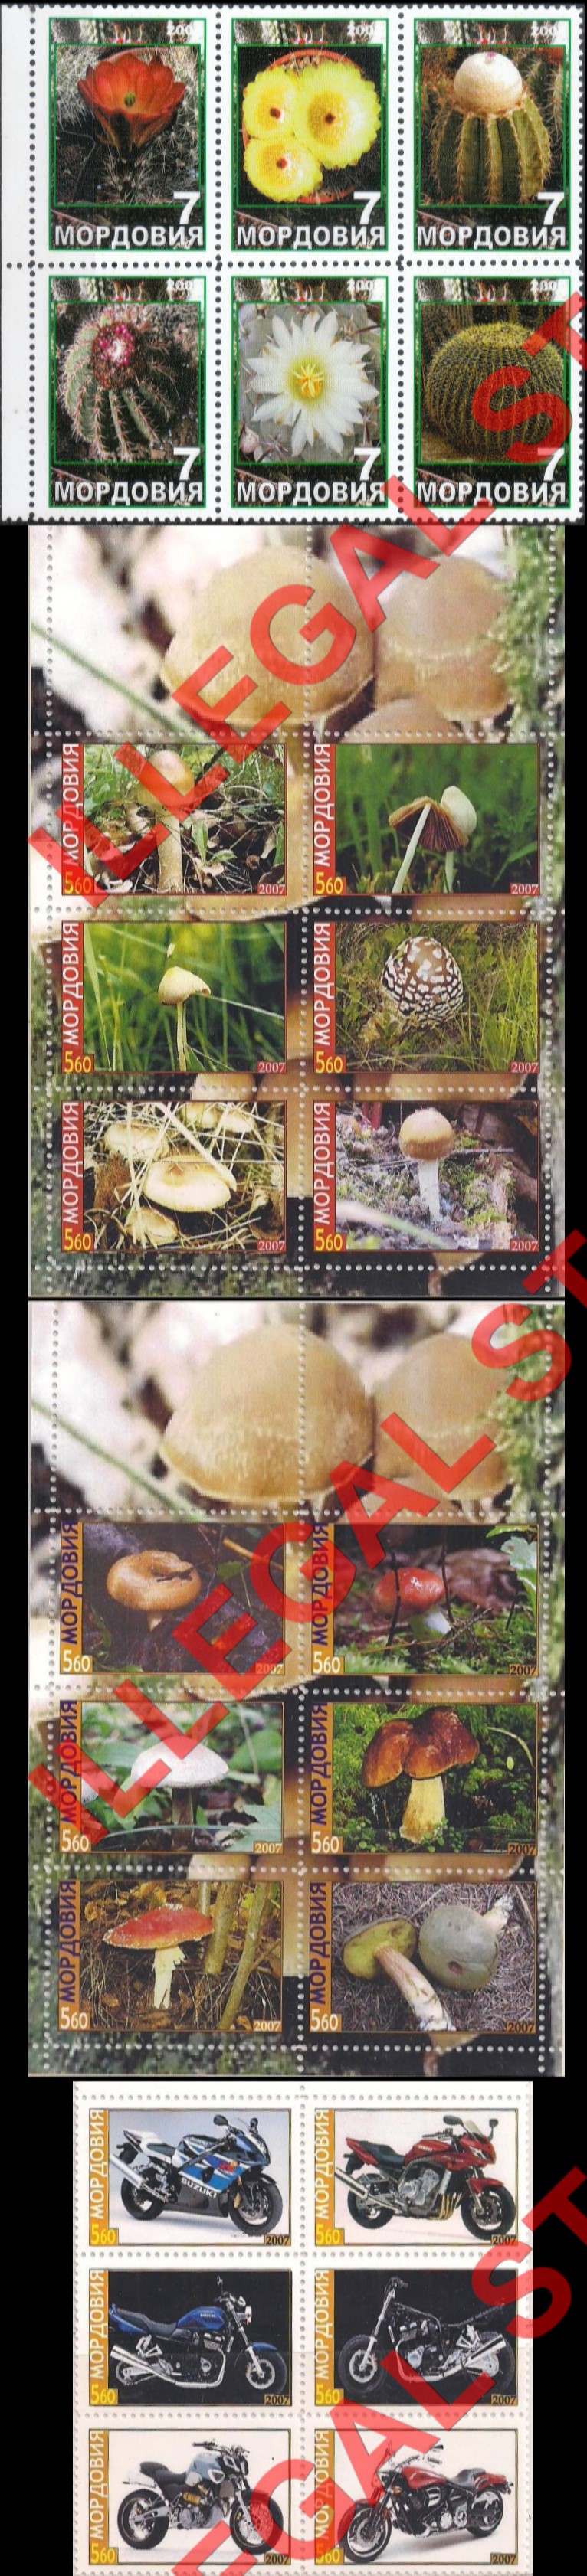 Republic of Mordovia 2007 Counterfeit Illegal Stamps